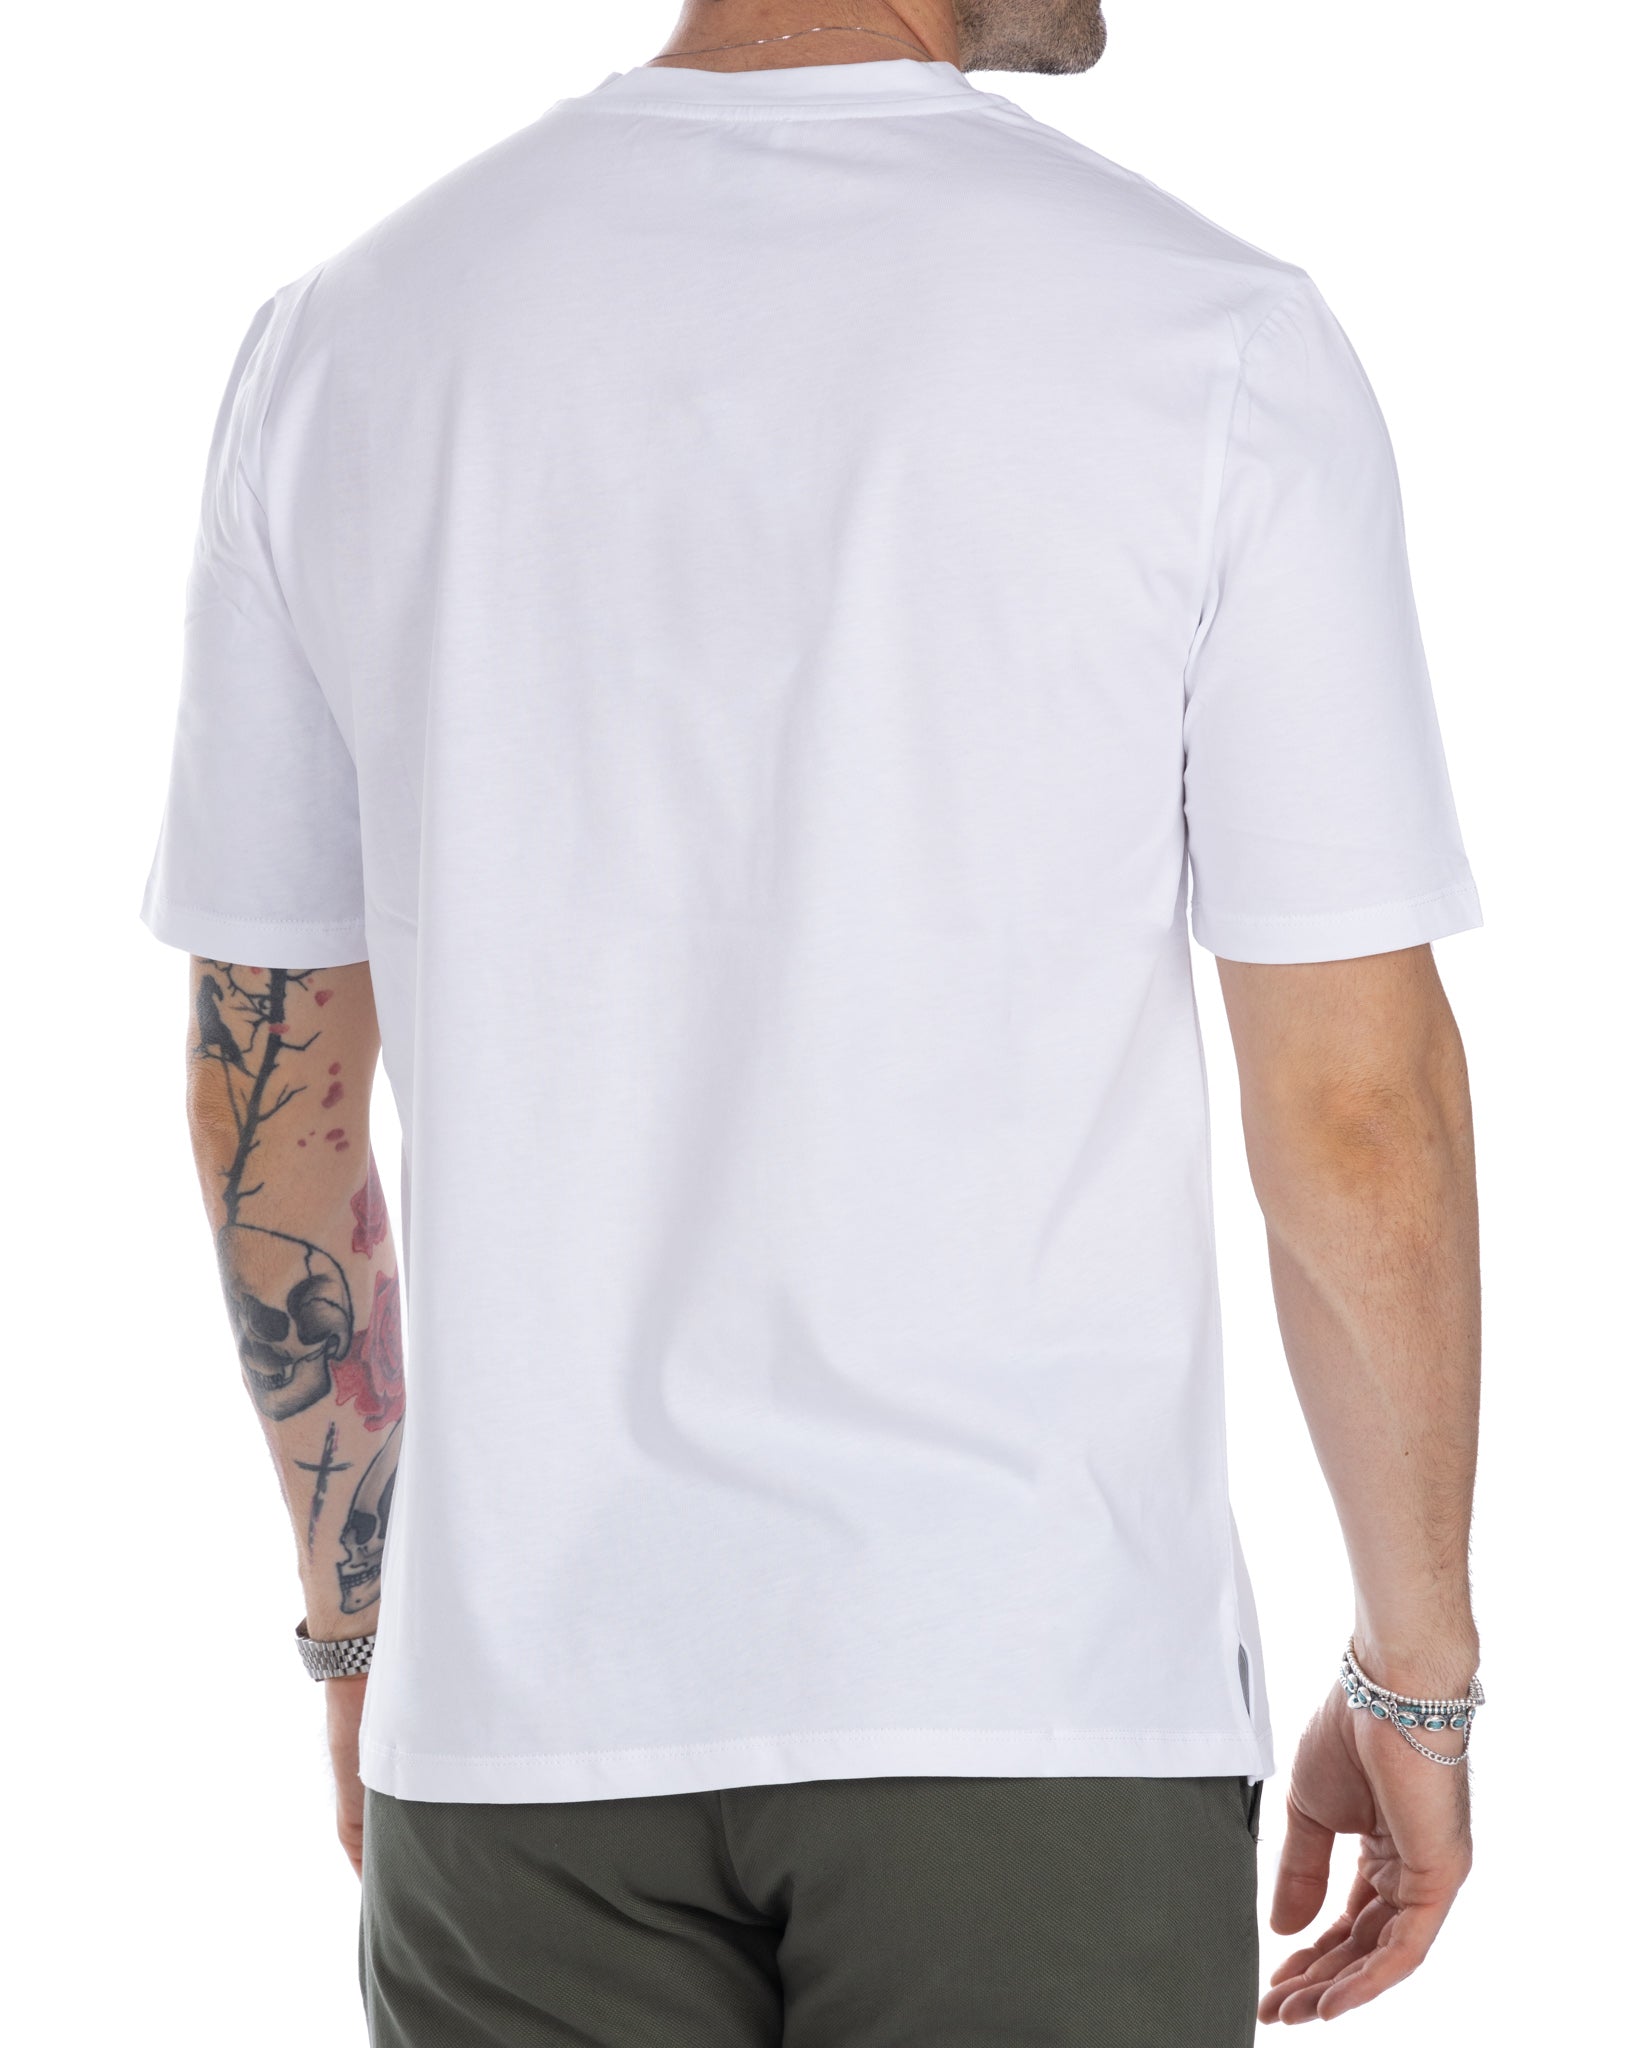 Tee - t-shirt basique en coton blanc